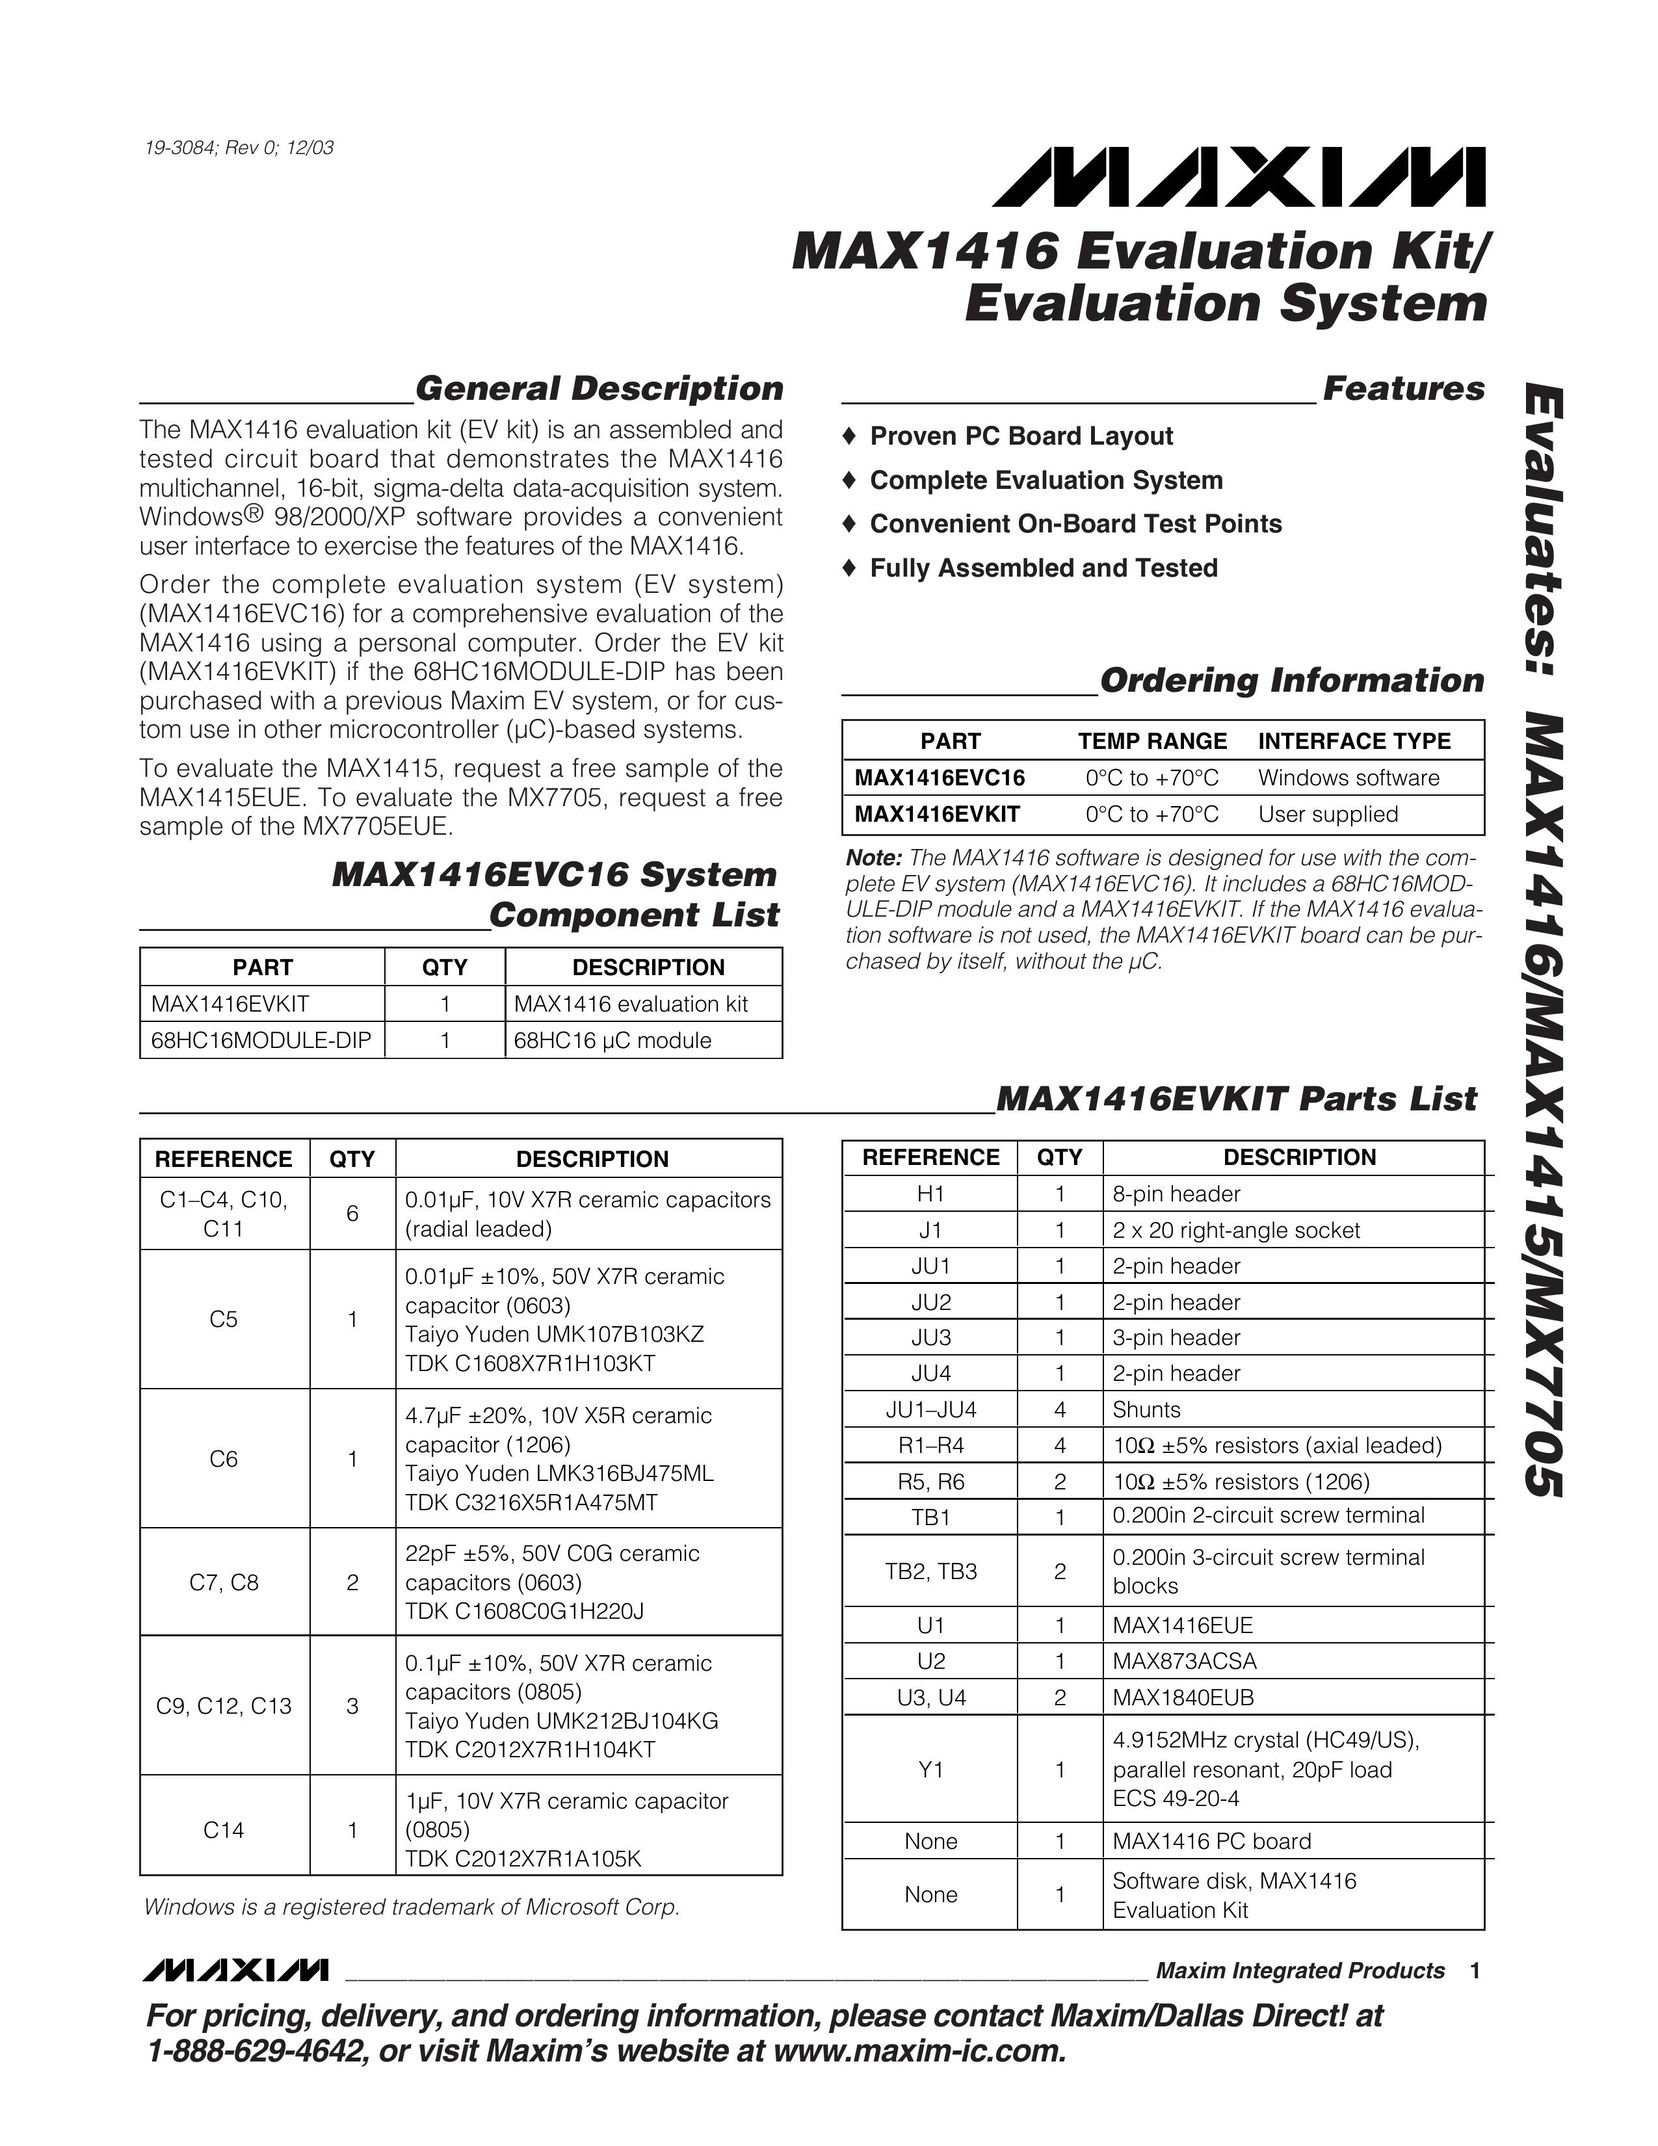 Maxim MX7705 Computer Hardware User Manual